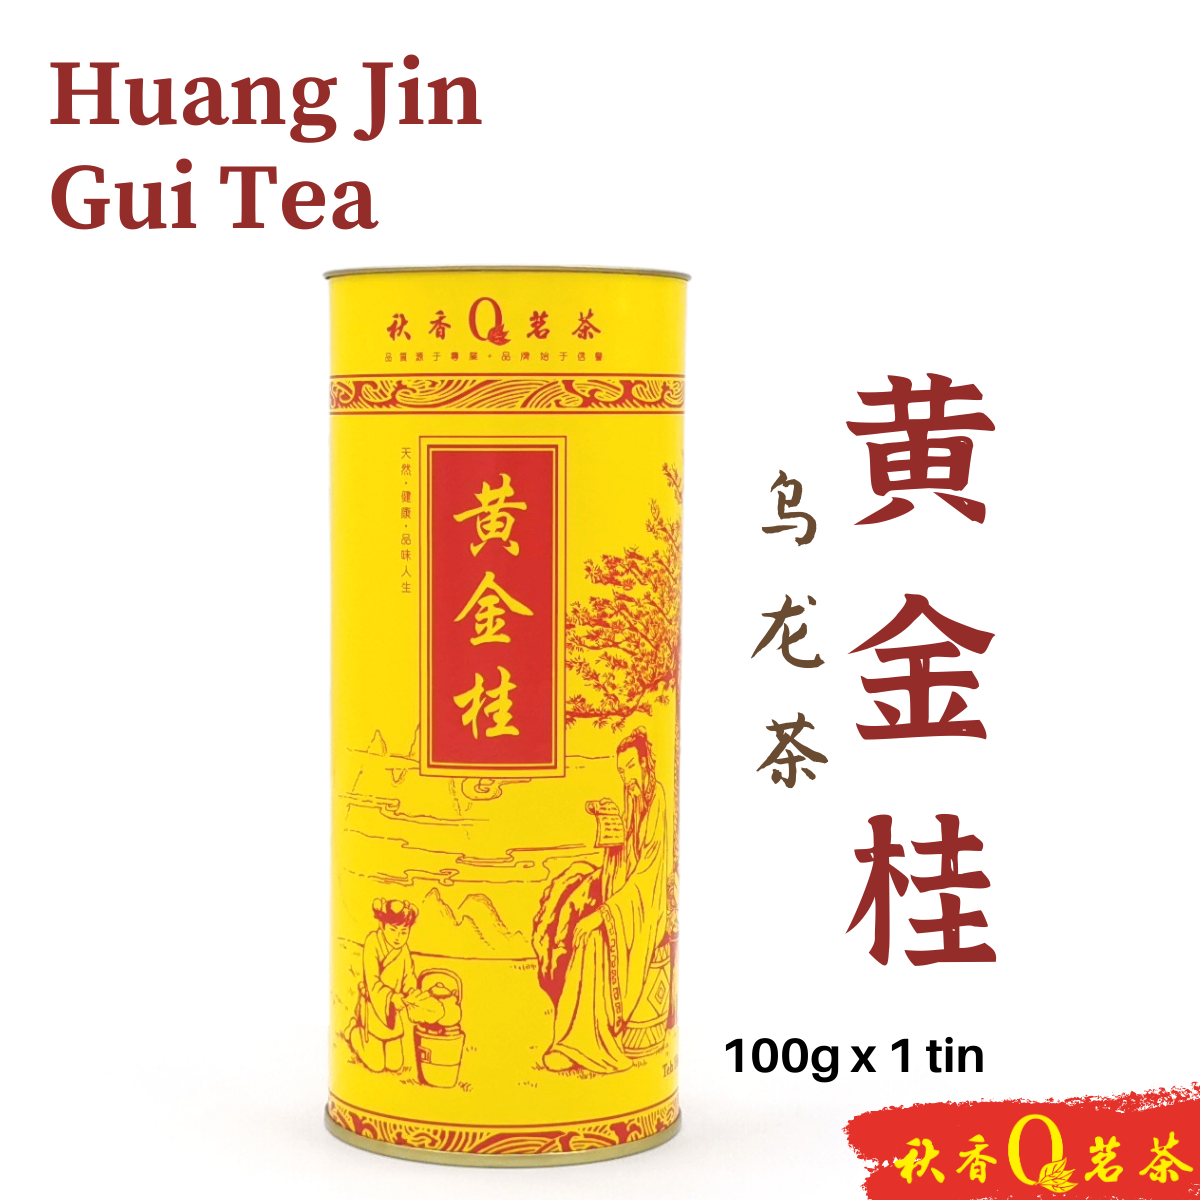 黄金桂 Huang Jin Gui tea【100g】|【乌龙茶 Oolong tea】